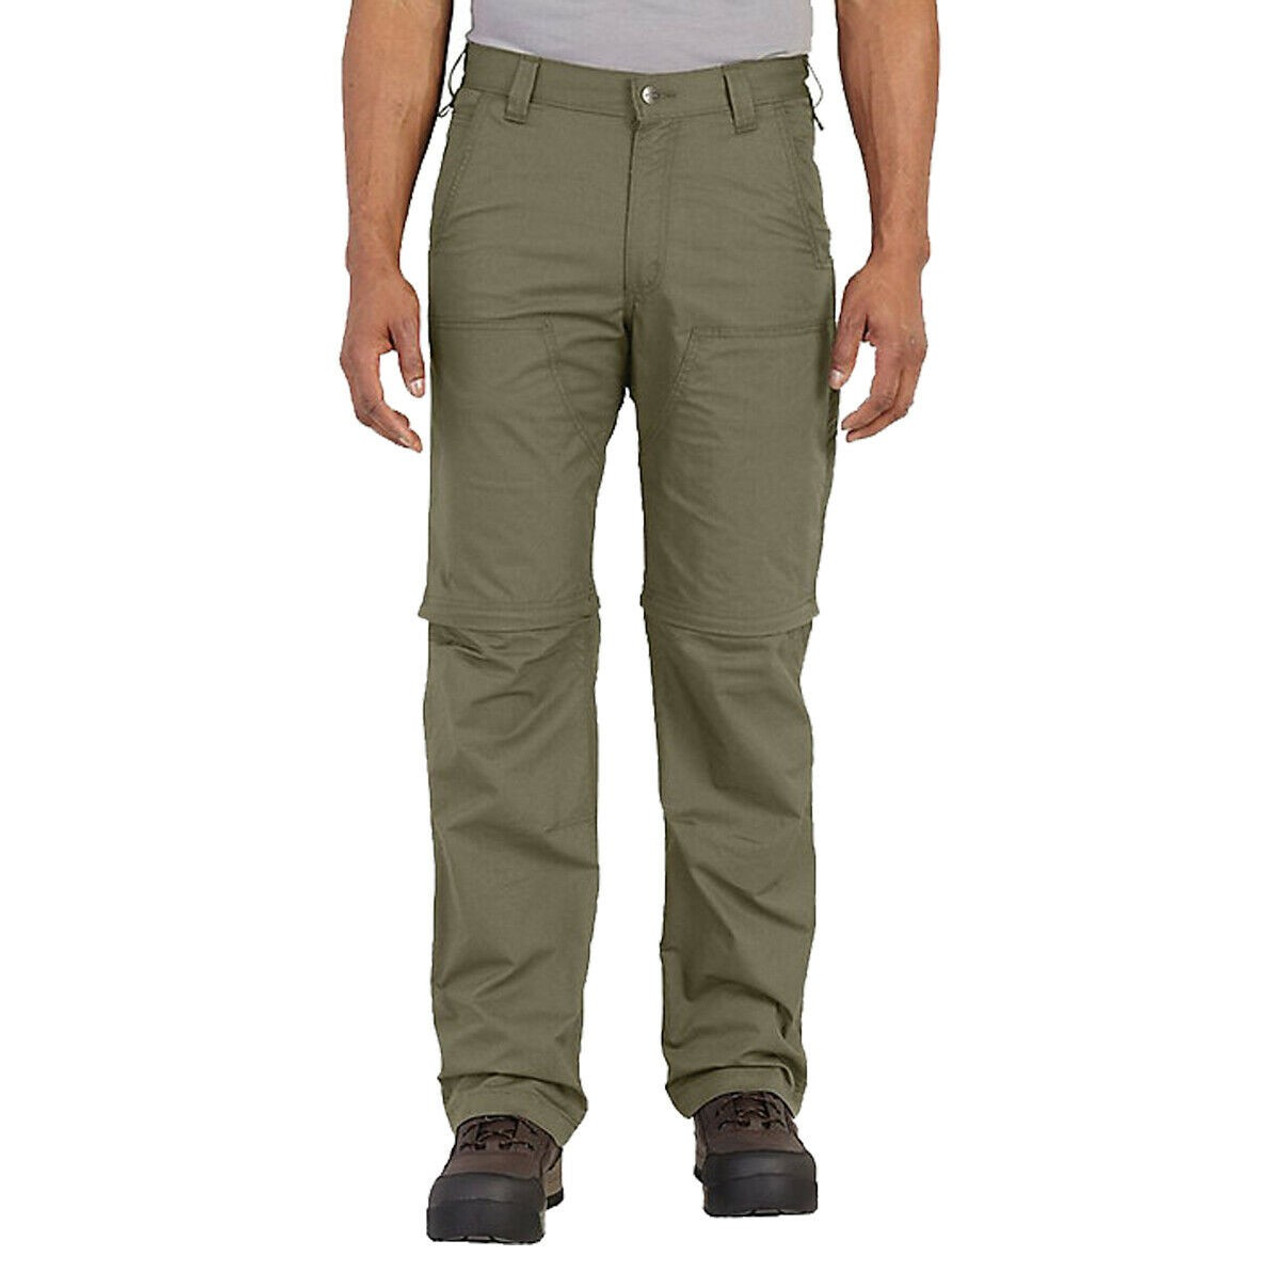 Convertible Cargo Pants - Green